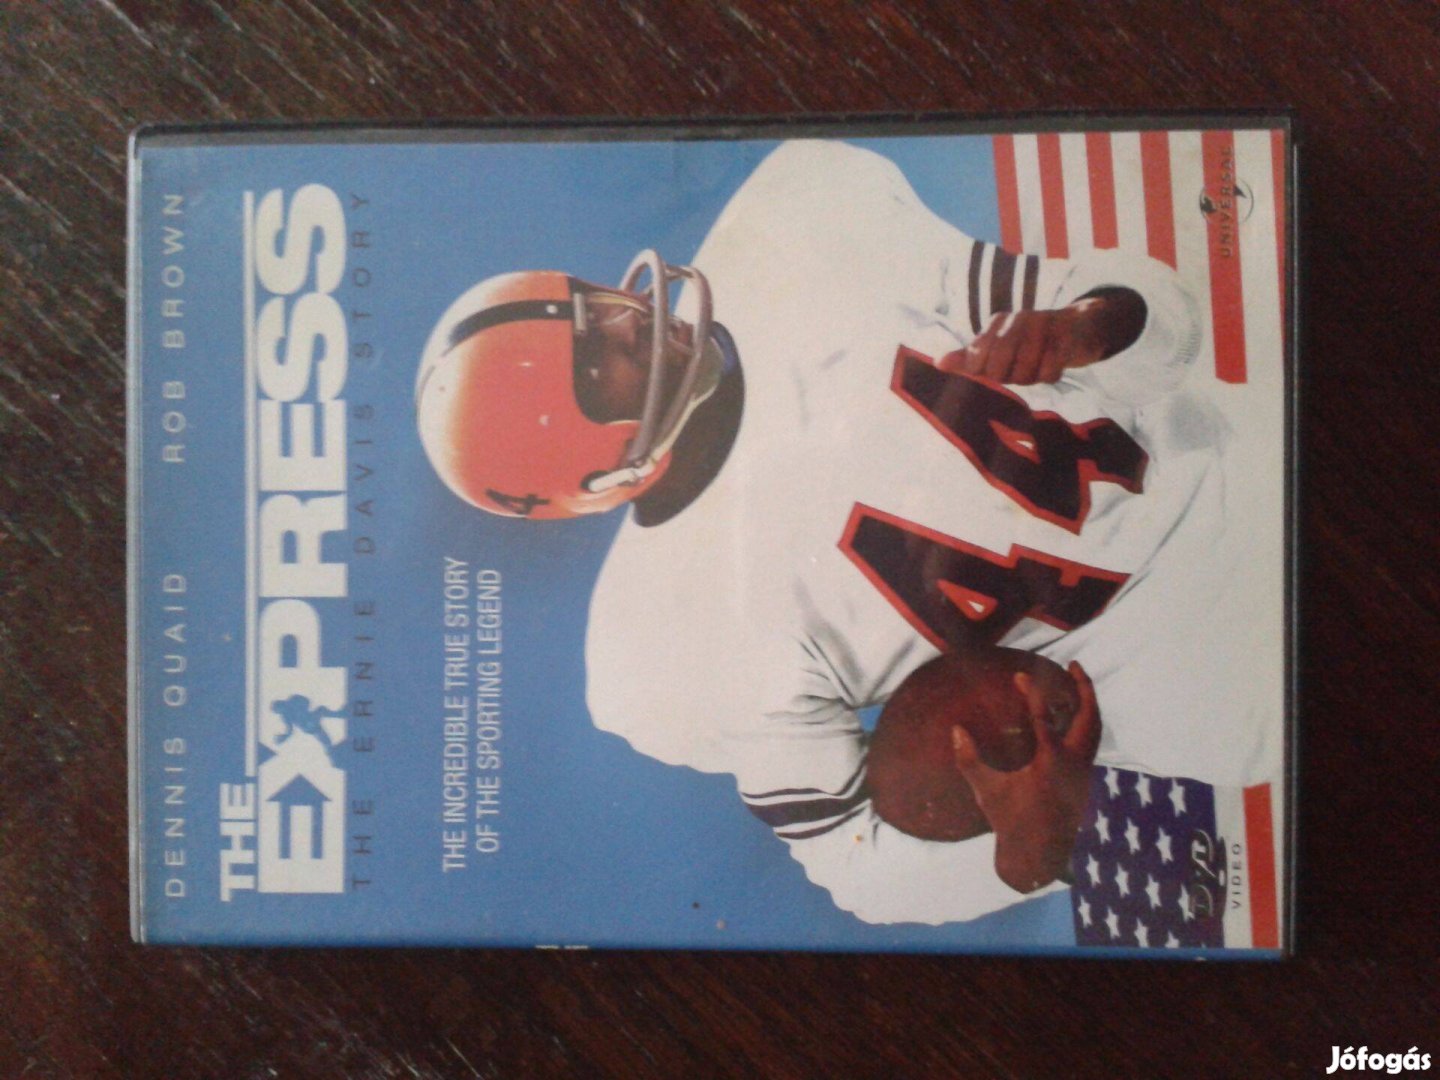 The express DVD